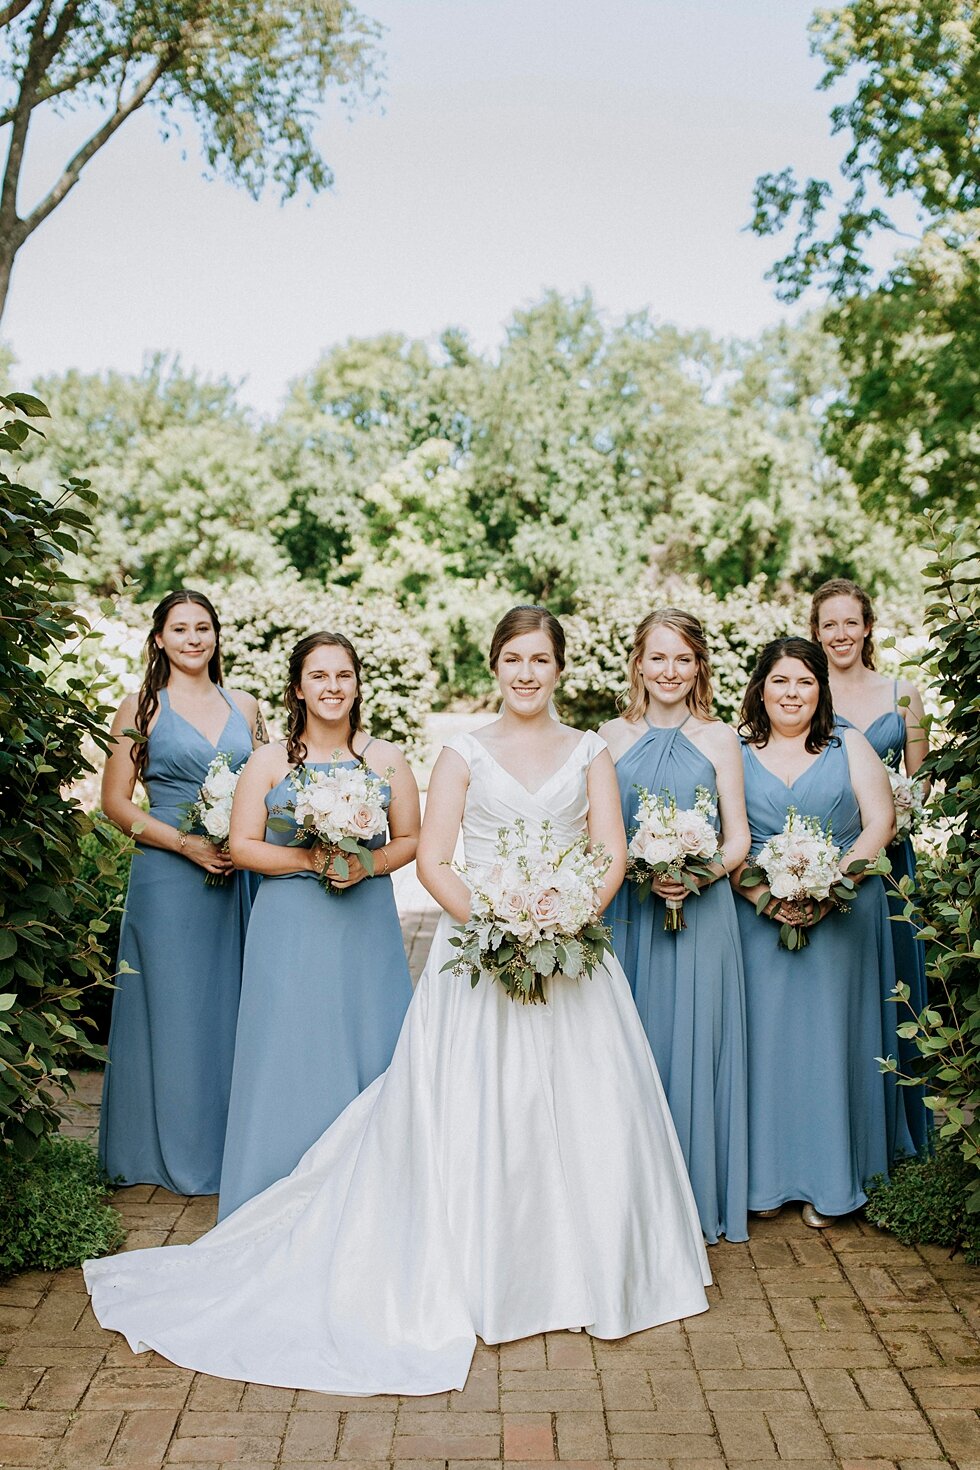  bride and bridesmaids with bouquets wearing blue dresses in garden  #thatsdarling #weddingday #weddinginspiration #weddingphoto #love #justmarried #midwestphotographer #kywedding #louisville #kentuckywedding #louisvillekyweddingphotographer #wedding